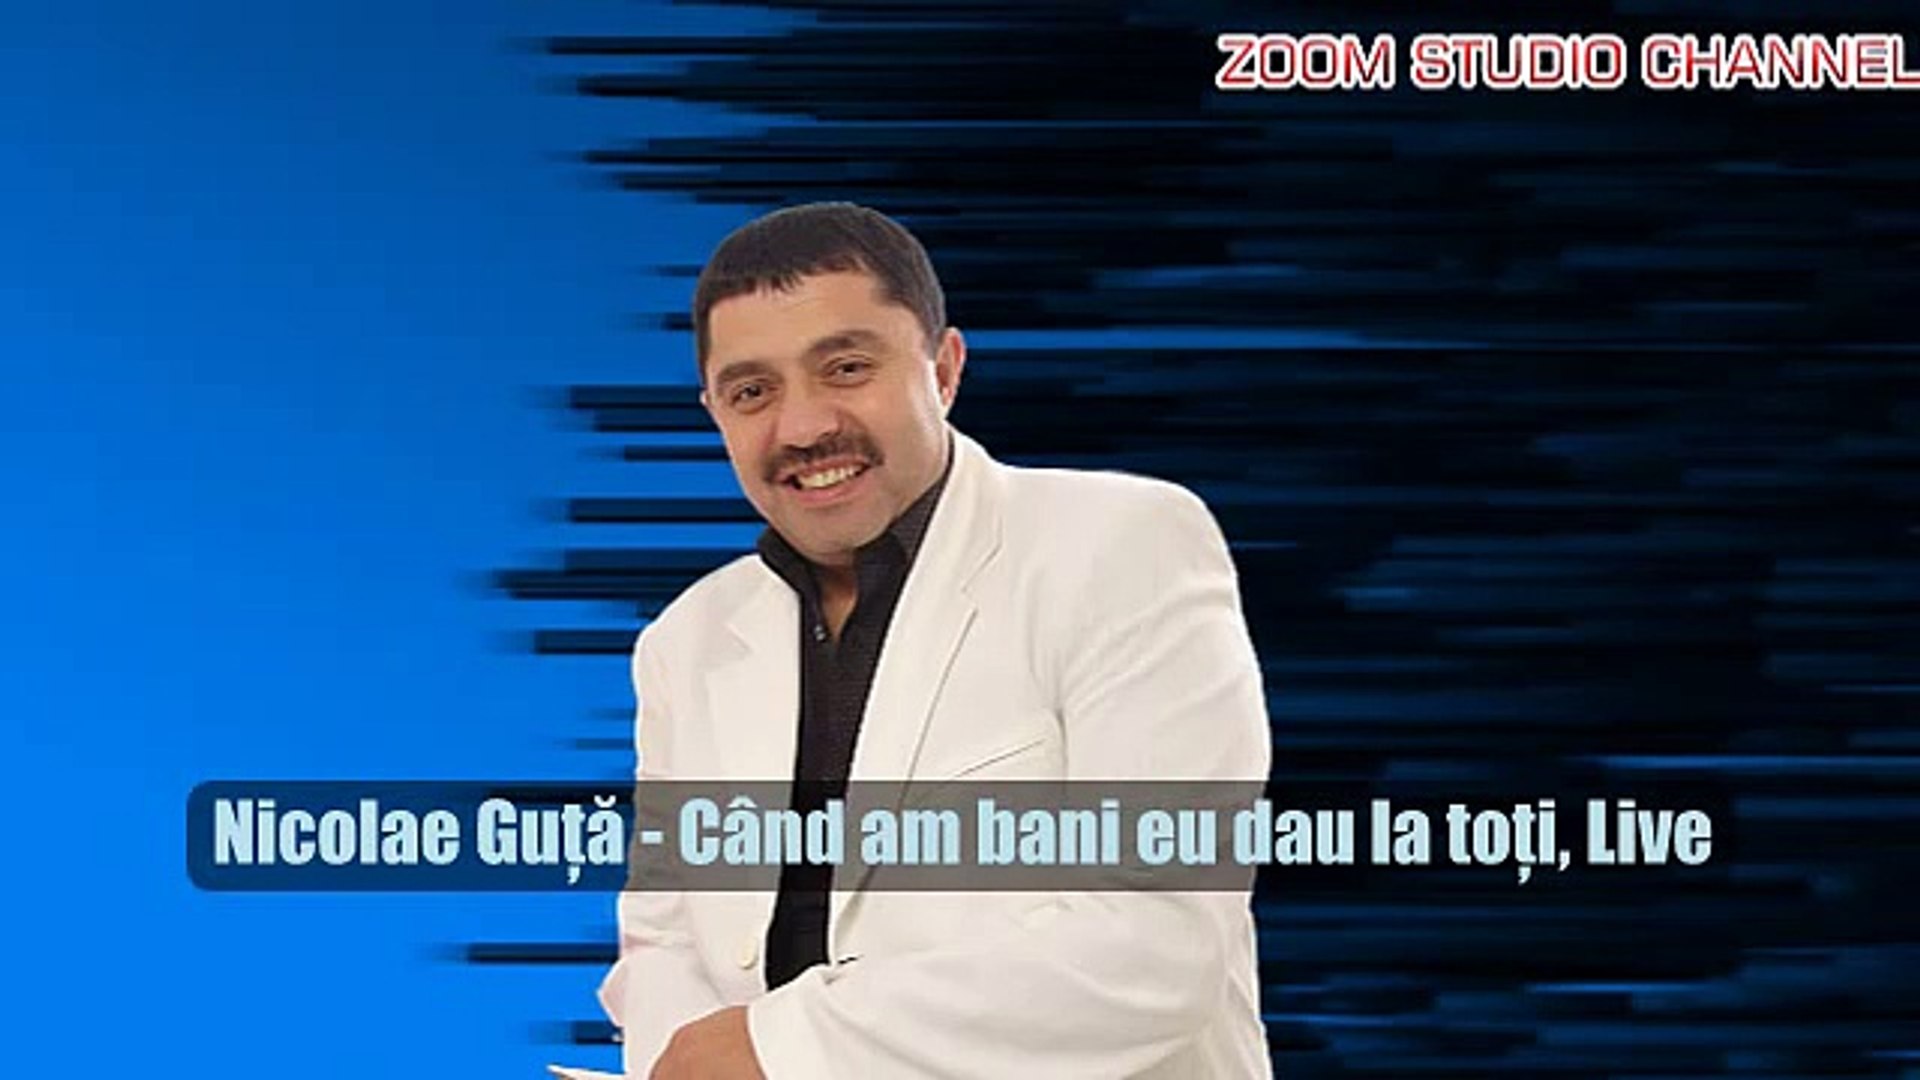 NICOLAE GUTA - CAND AM BANI DAU LA TOTI, ZOOM STUDIO - Dailymotion Video